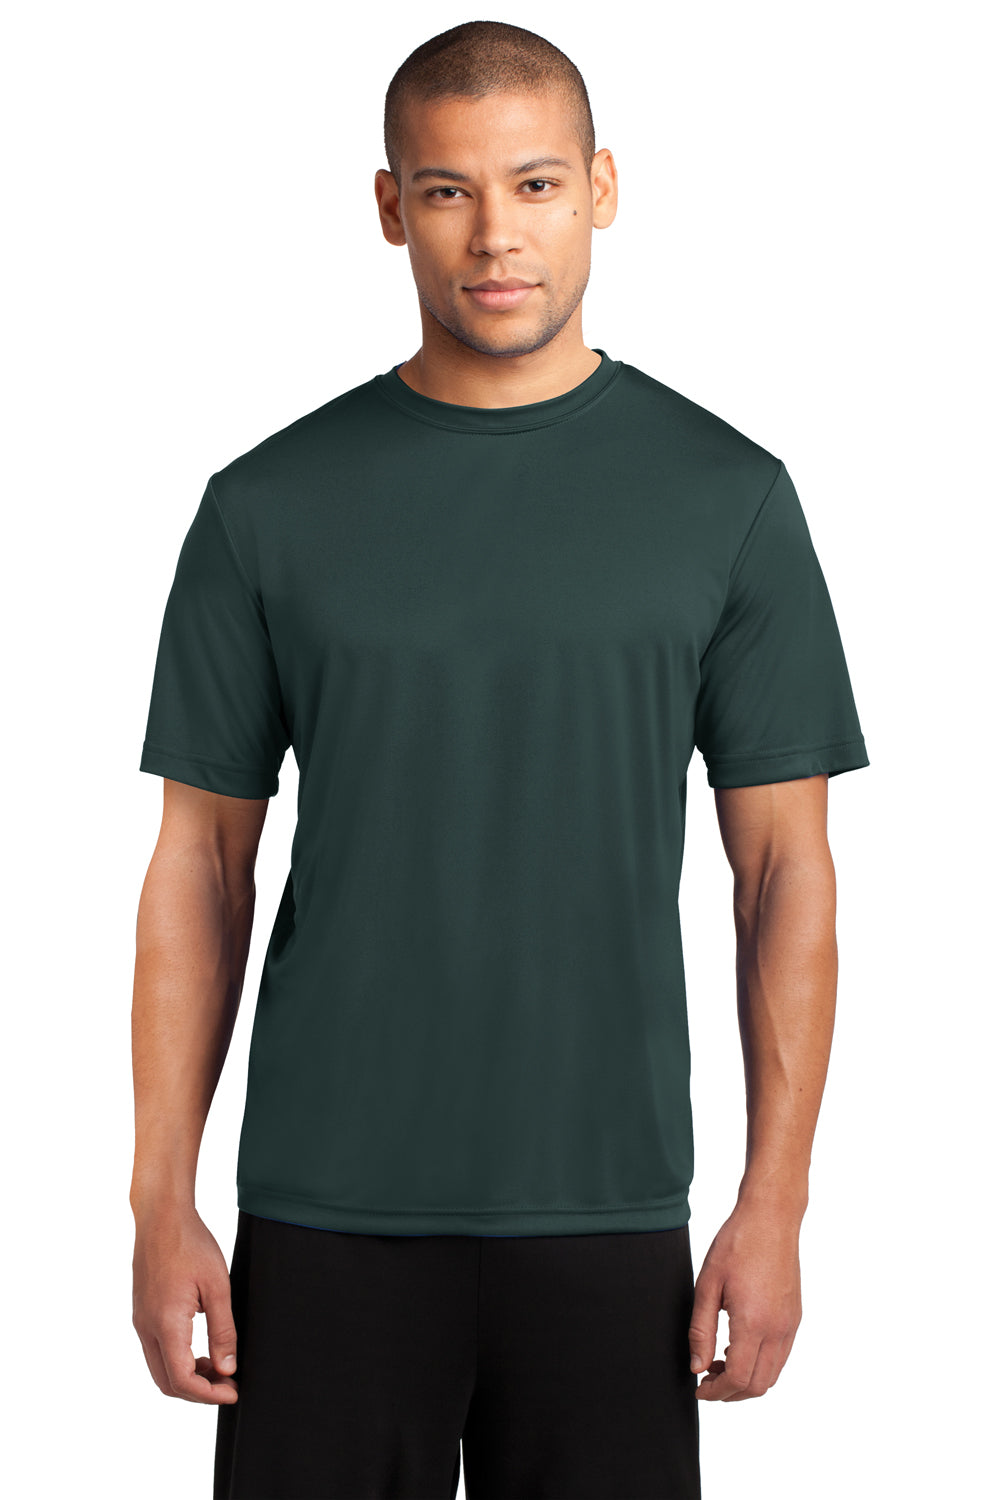 Port & Company PC380 Mens Dry Zone Performance Moisture Wicking Short Sleeve Crewneck T-Shirt Dark Green Front